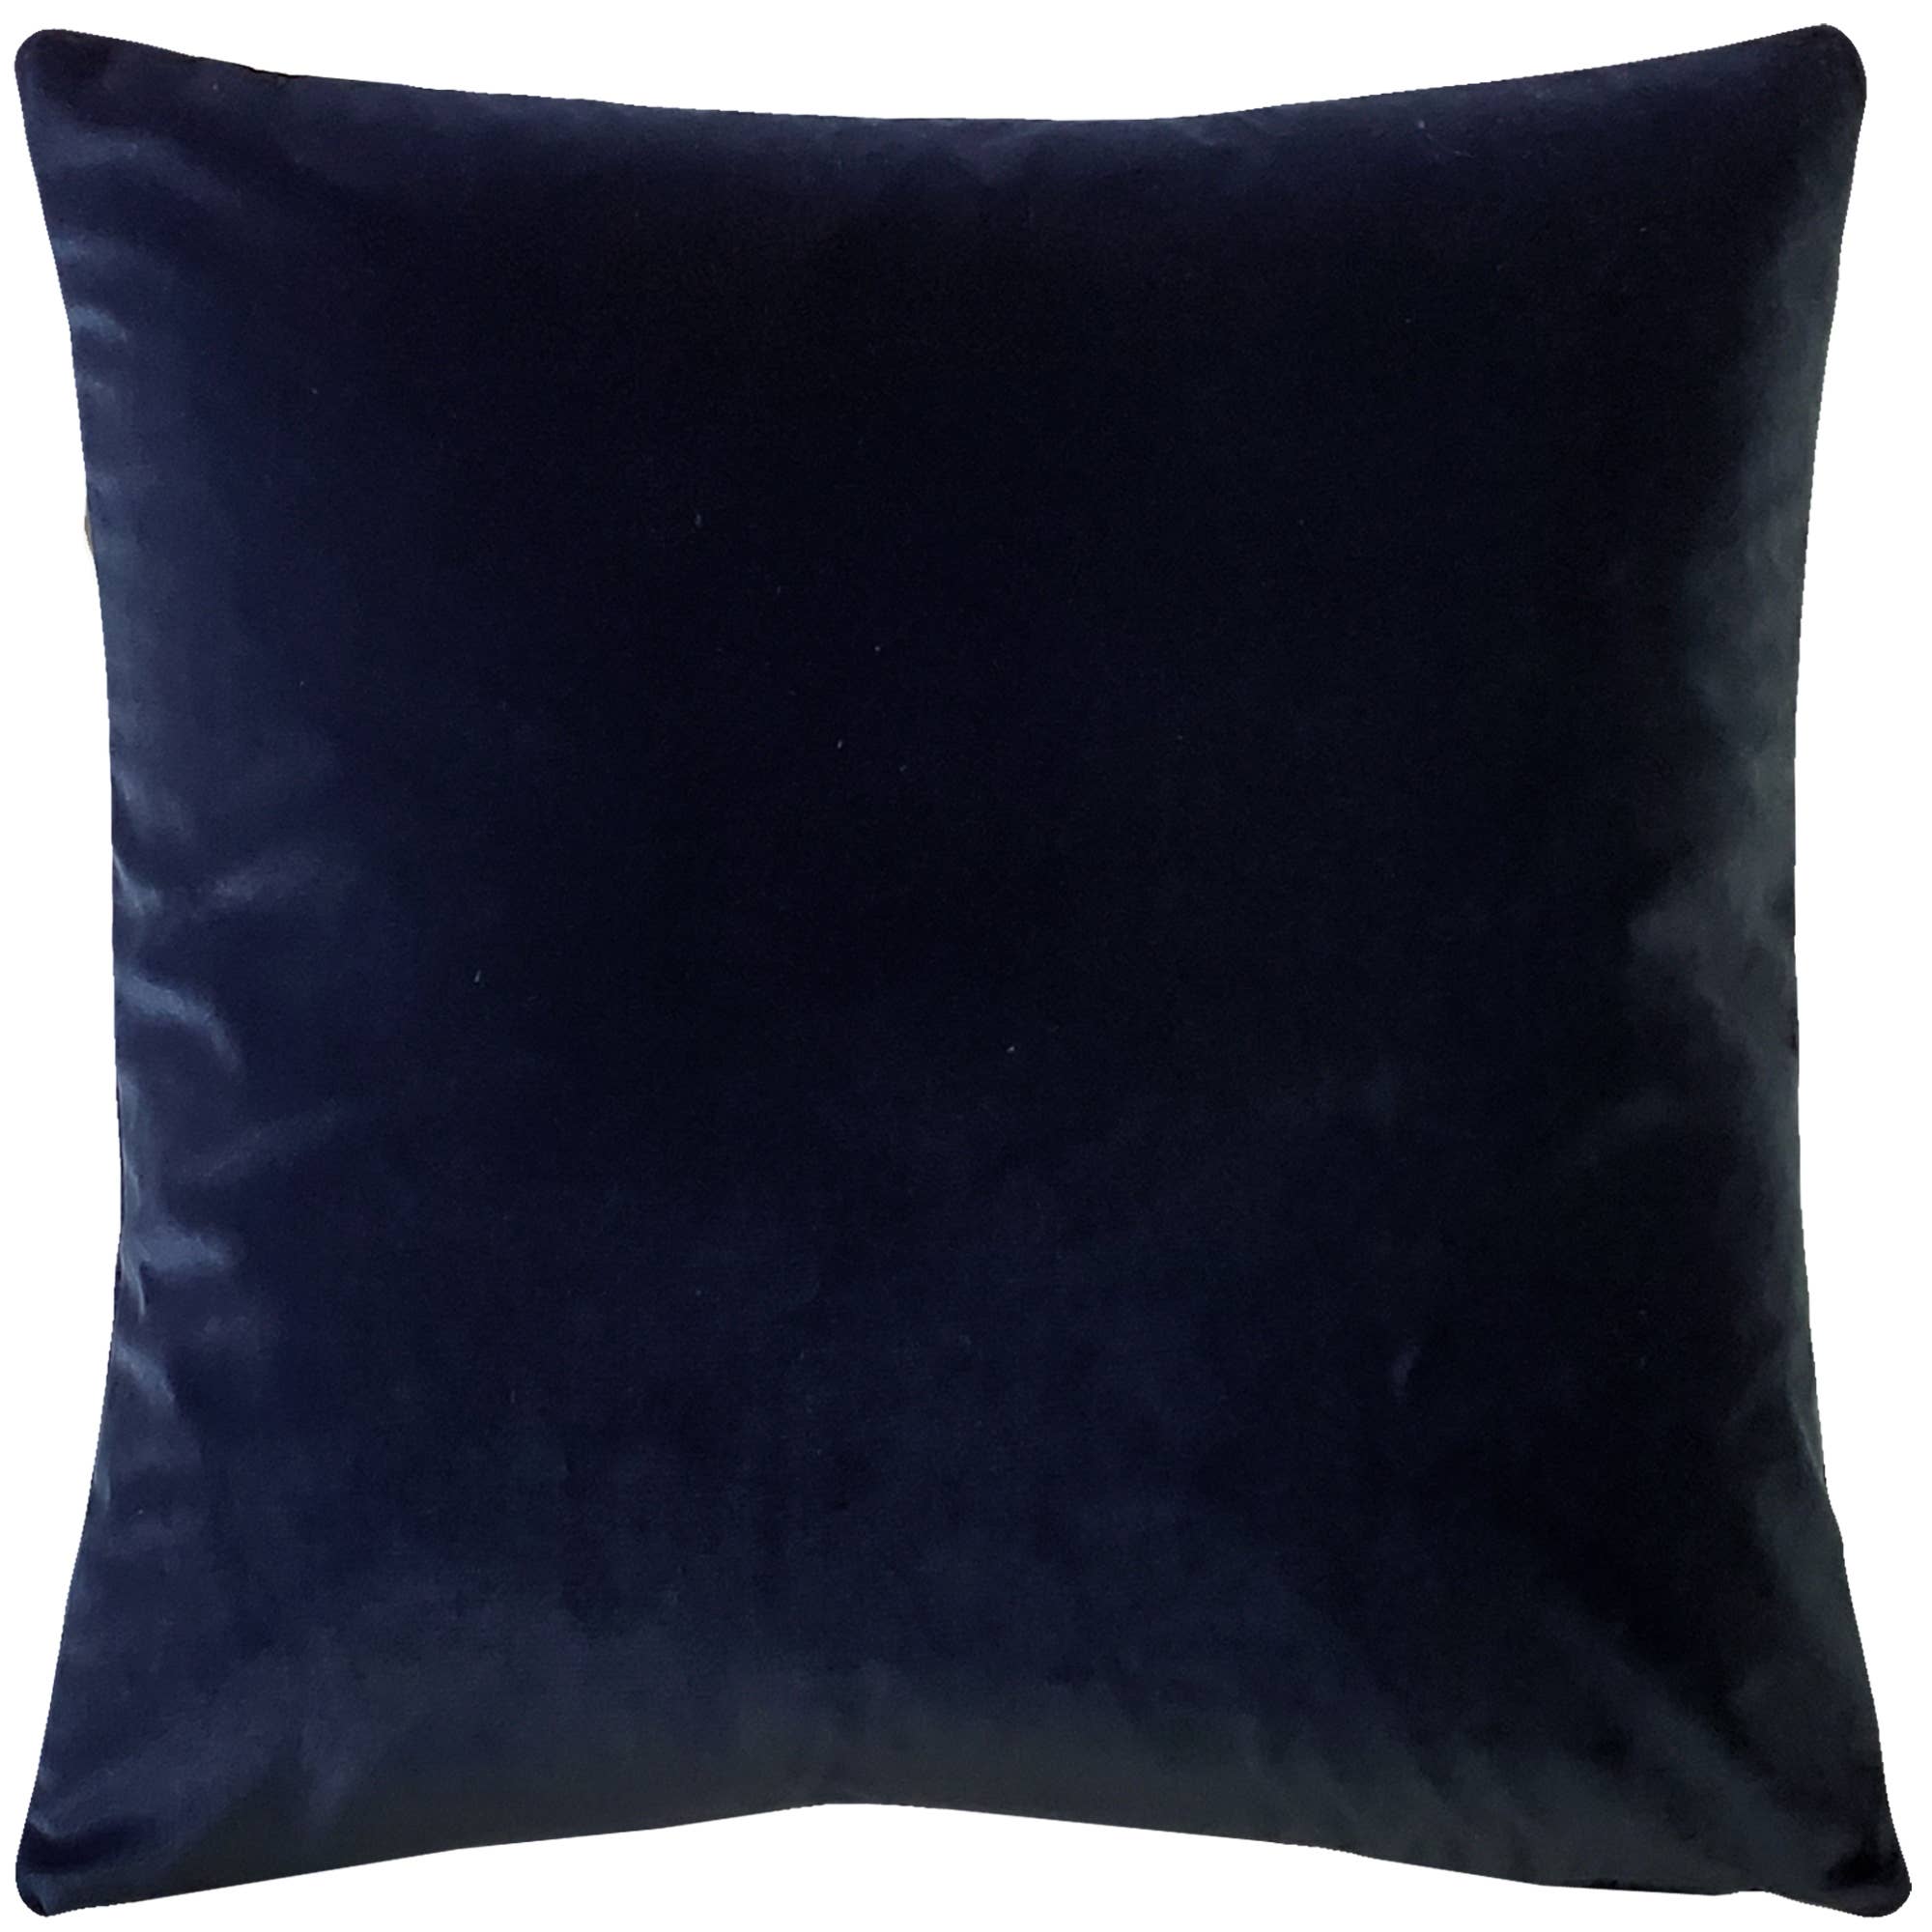 Castello Midnight Blue Velvet Throw Pillow, 17"x17" Square